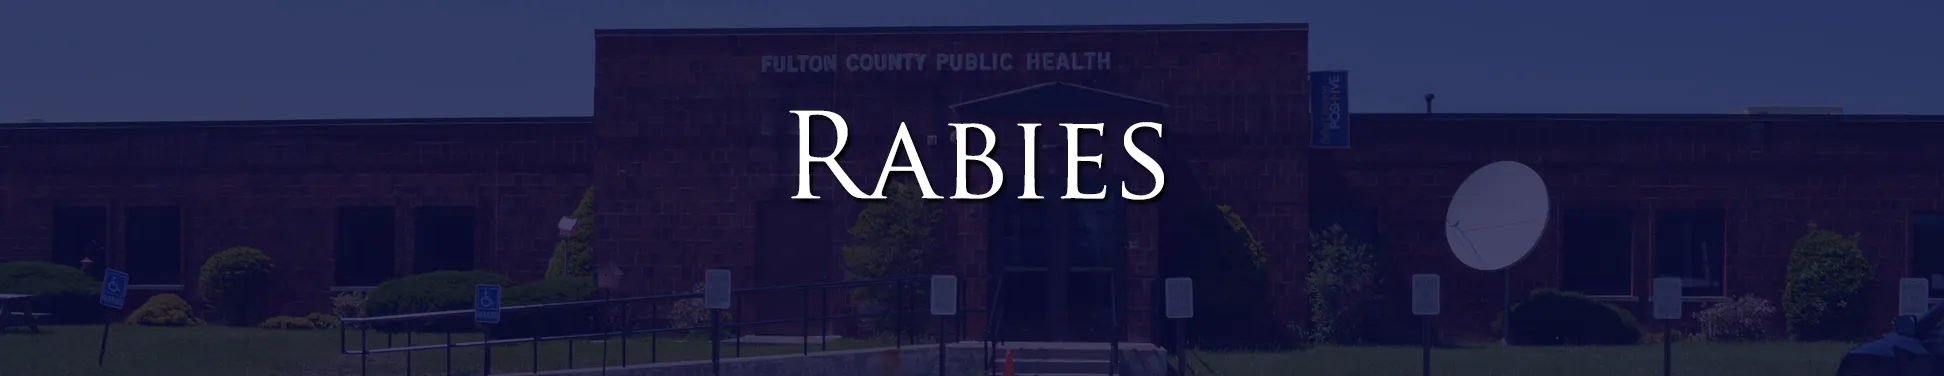 Public Health - Rabies